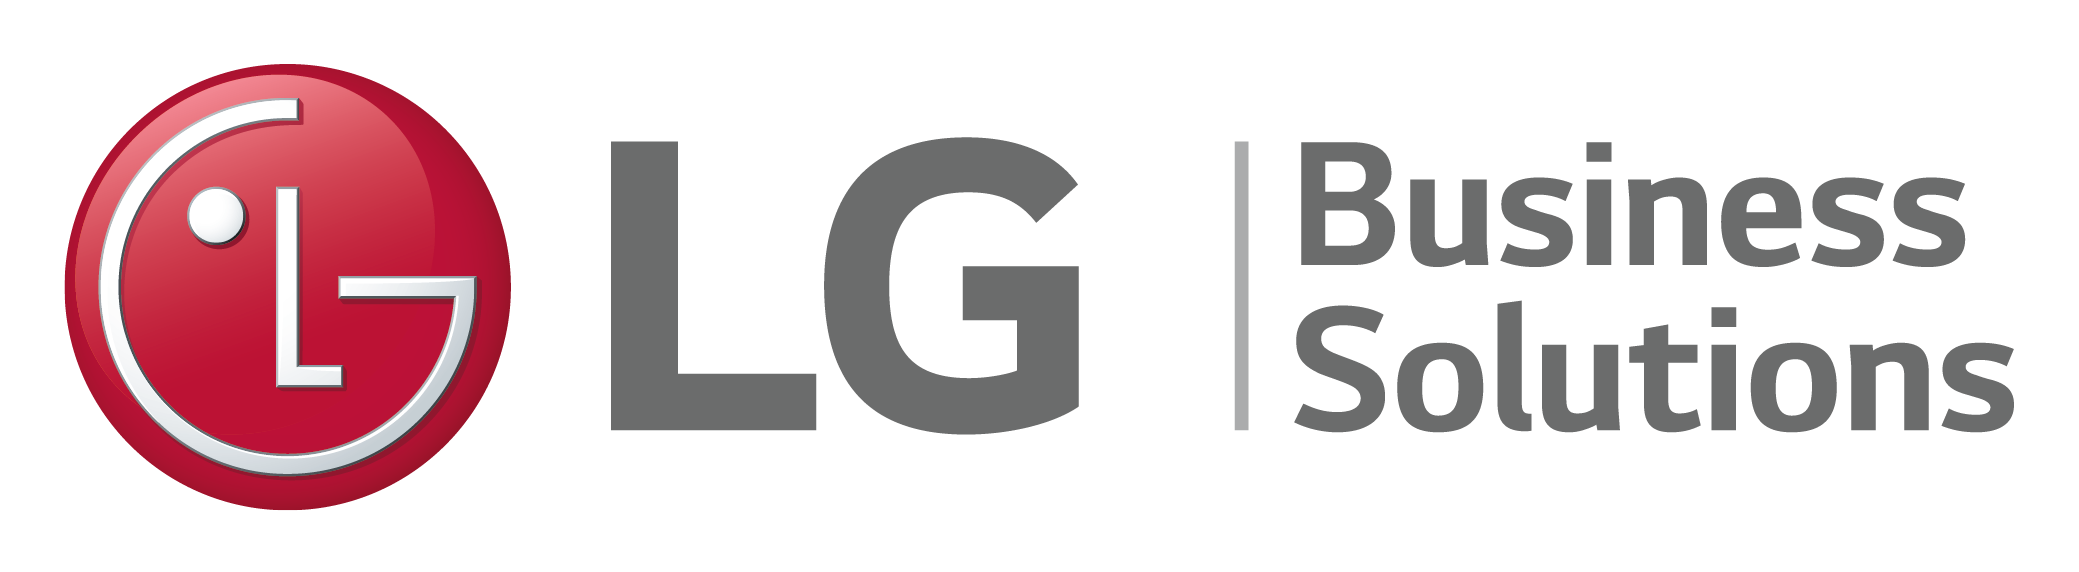 1 LGE_B2B Brand Logo_3D_White Background